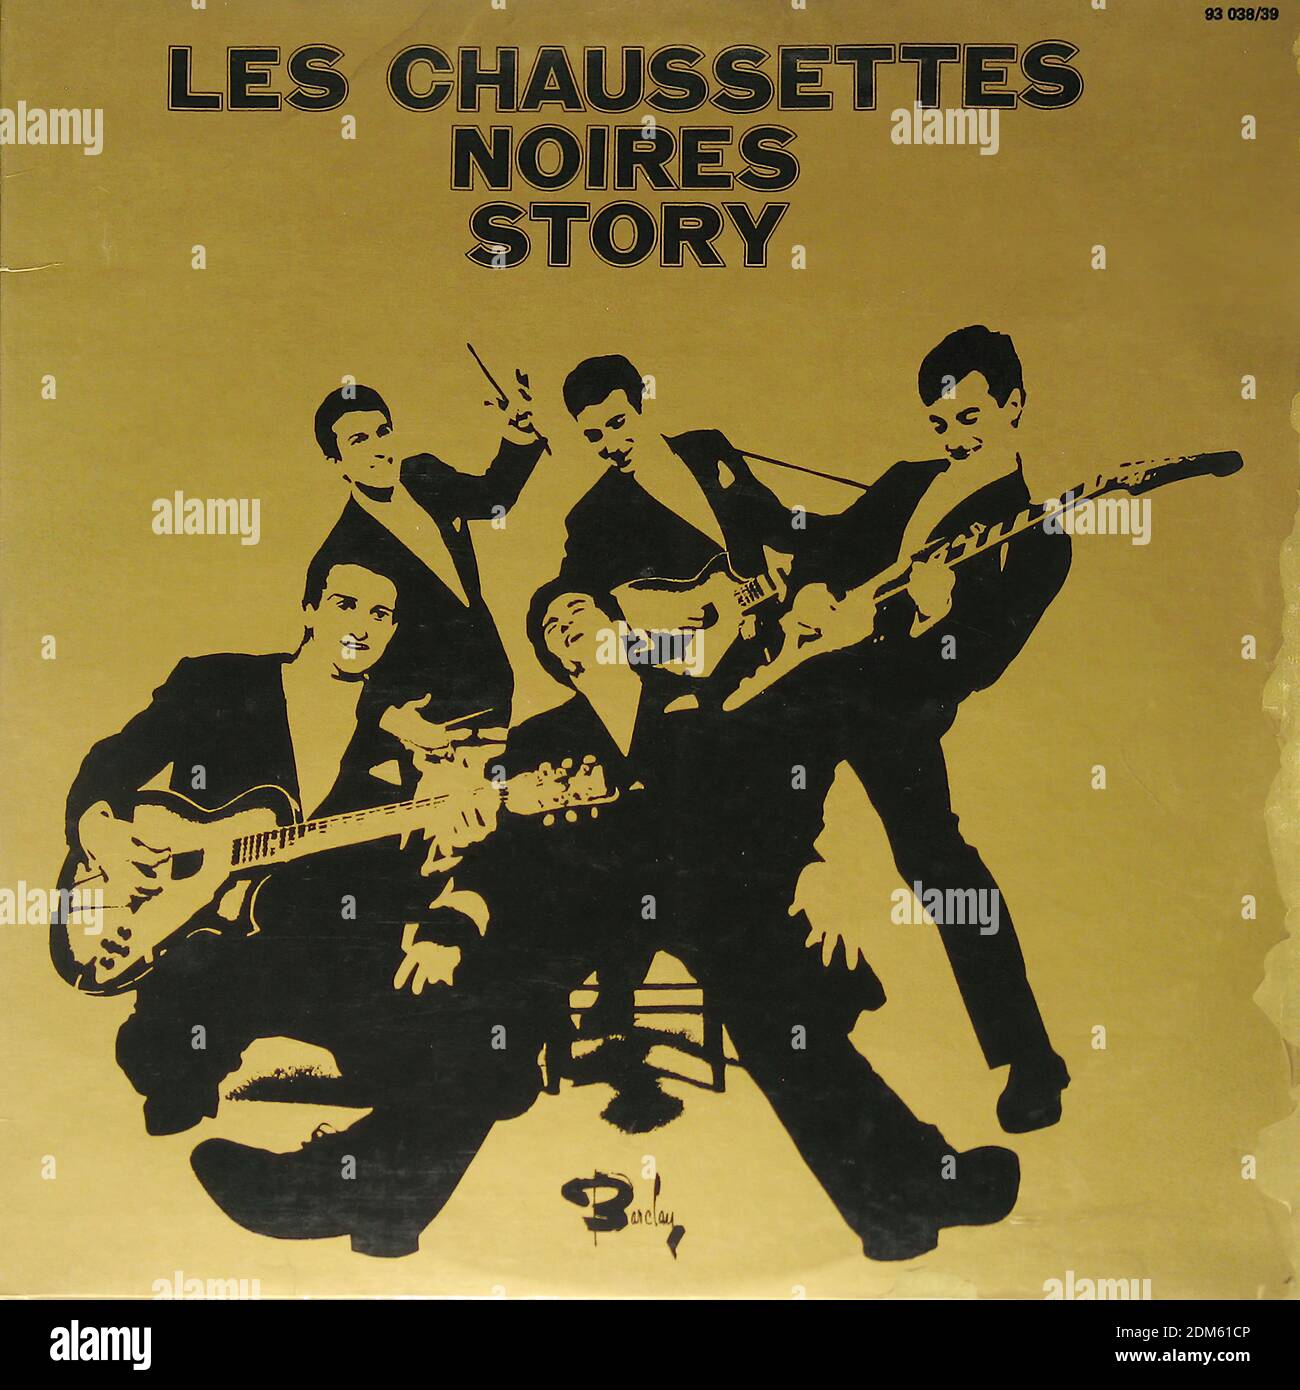 Les Chaussettes Noires Story Vol 1 + 2 Eddy Mitchell - Vintage Vinyl Record  Cover Stock Photo - Alamy